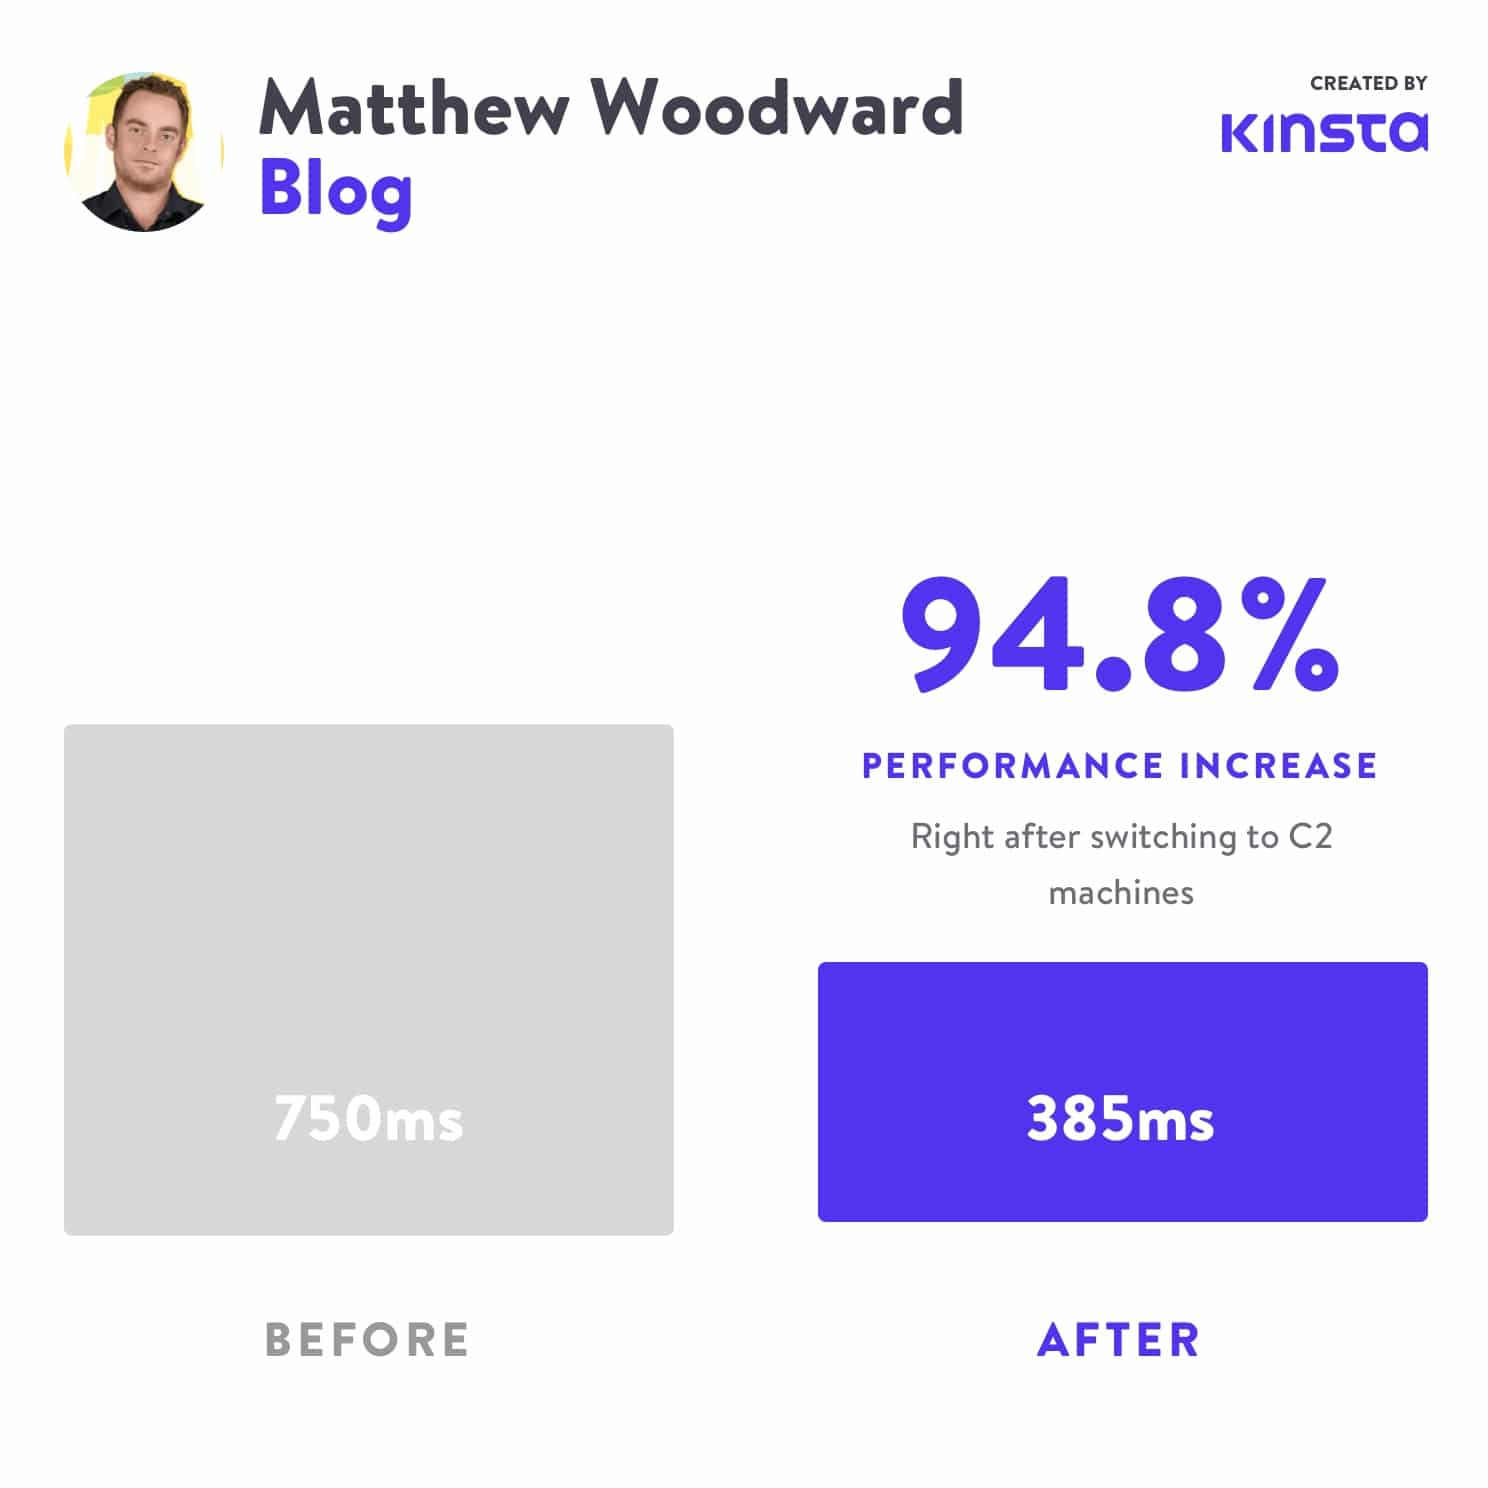 Matthew Woodward viu um aumento de desempenho de 94,8% após passar para a C2.